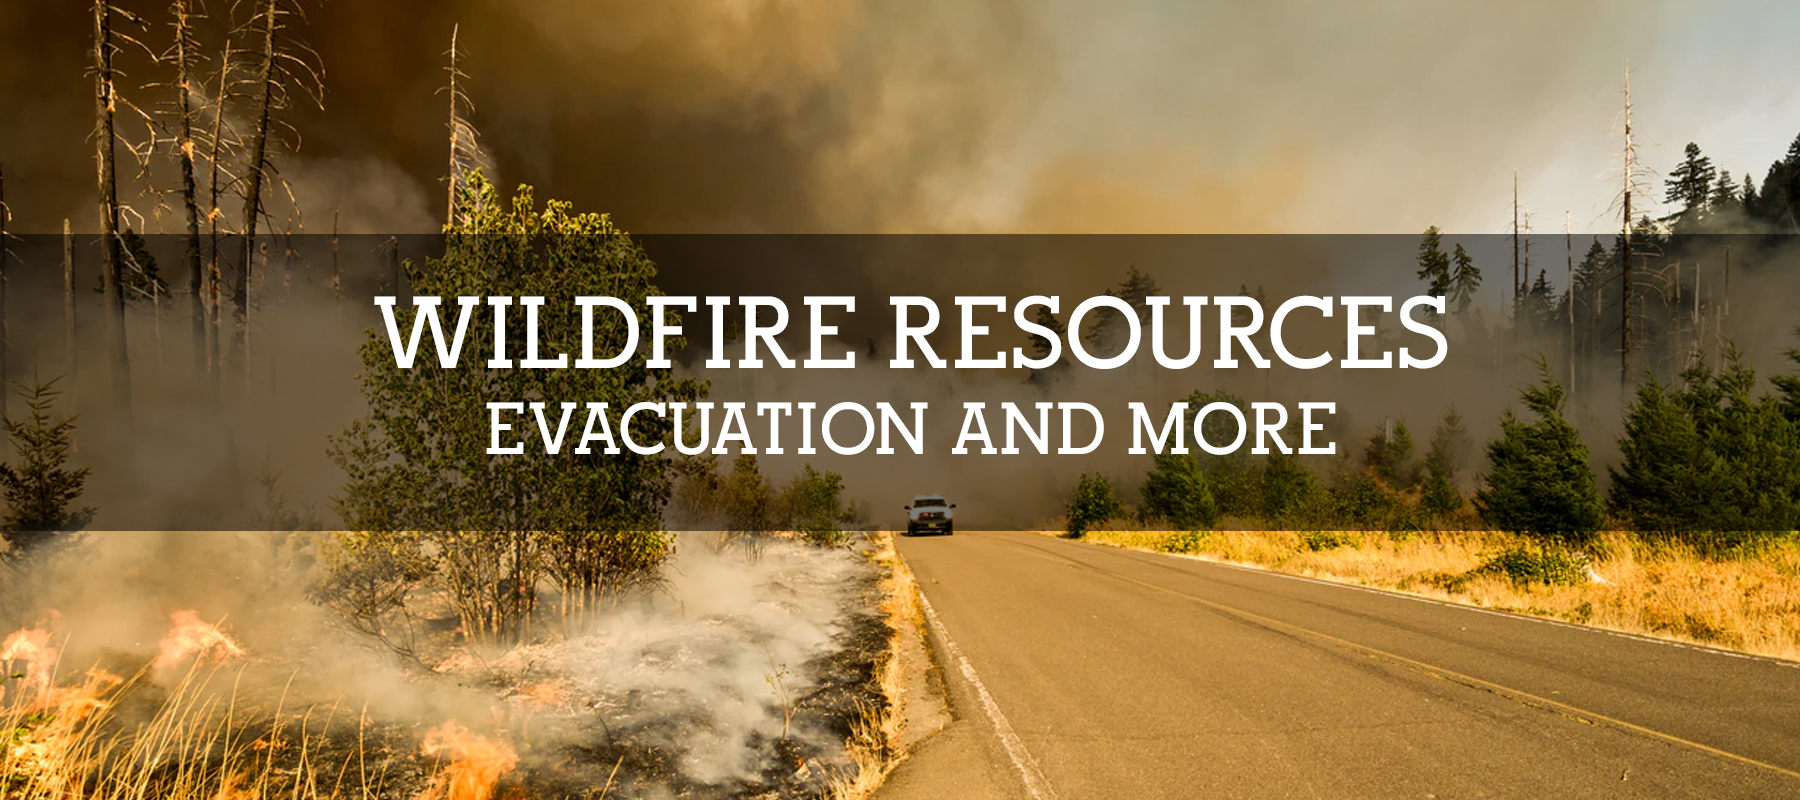 COLORADOR WILDFIRE RESOURCES - EVACUATION AND MORE